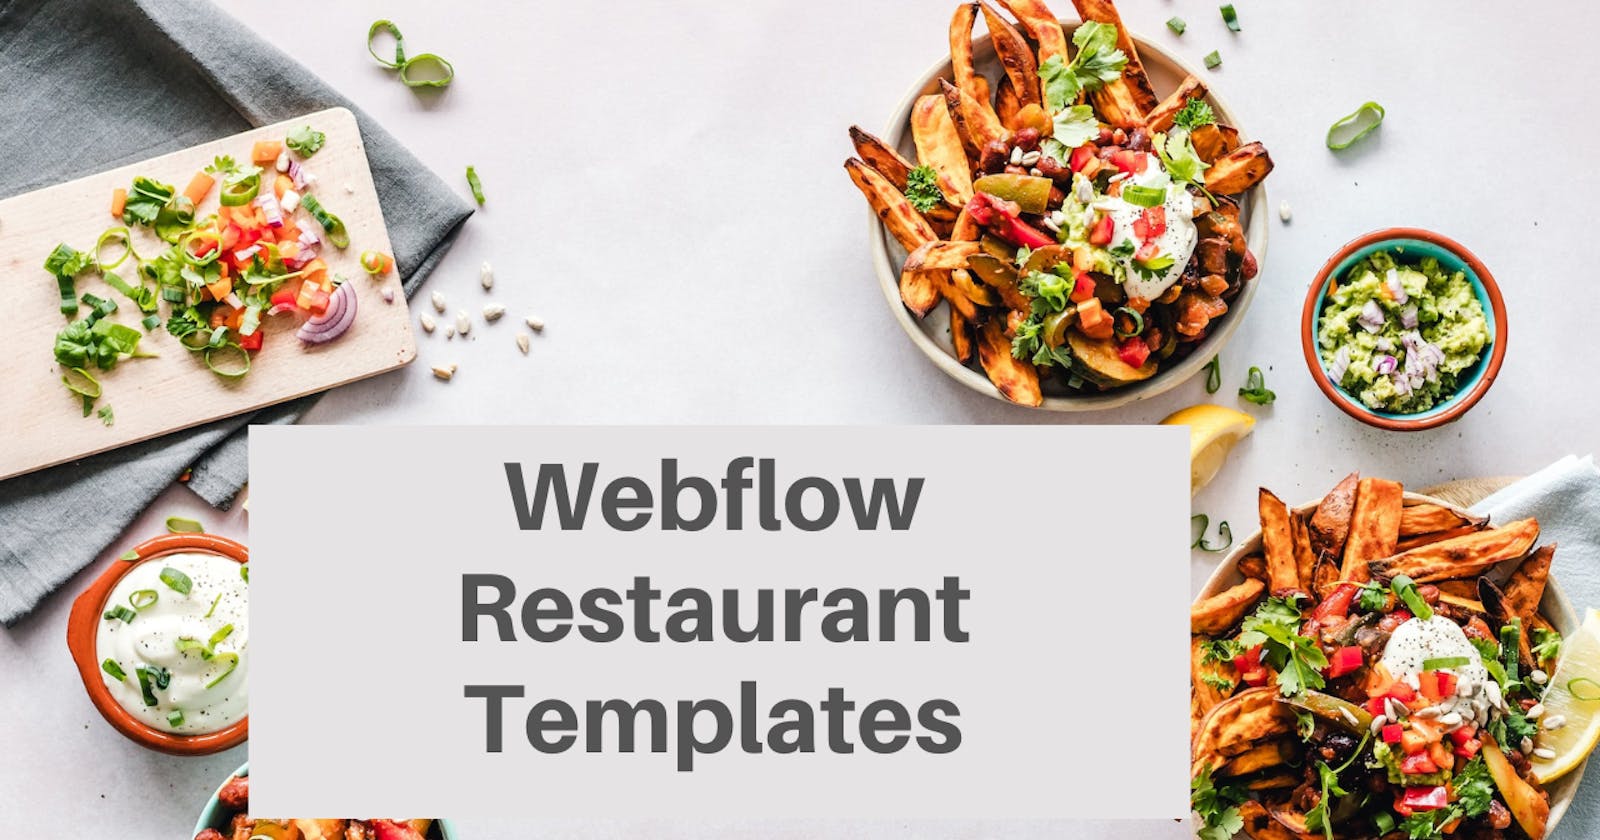 10 Best Webflow Restaurant Templates for Your Restaurant Website